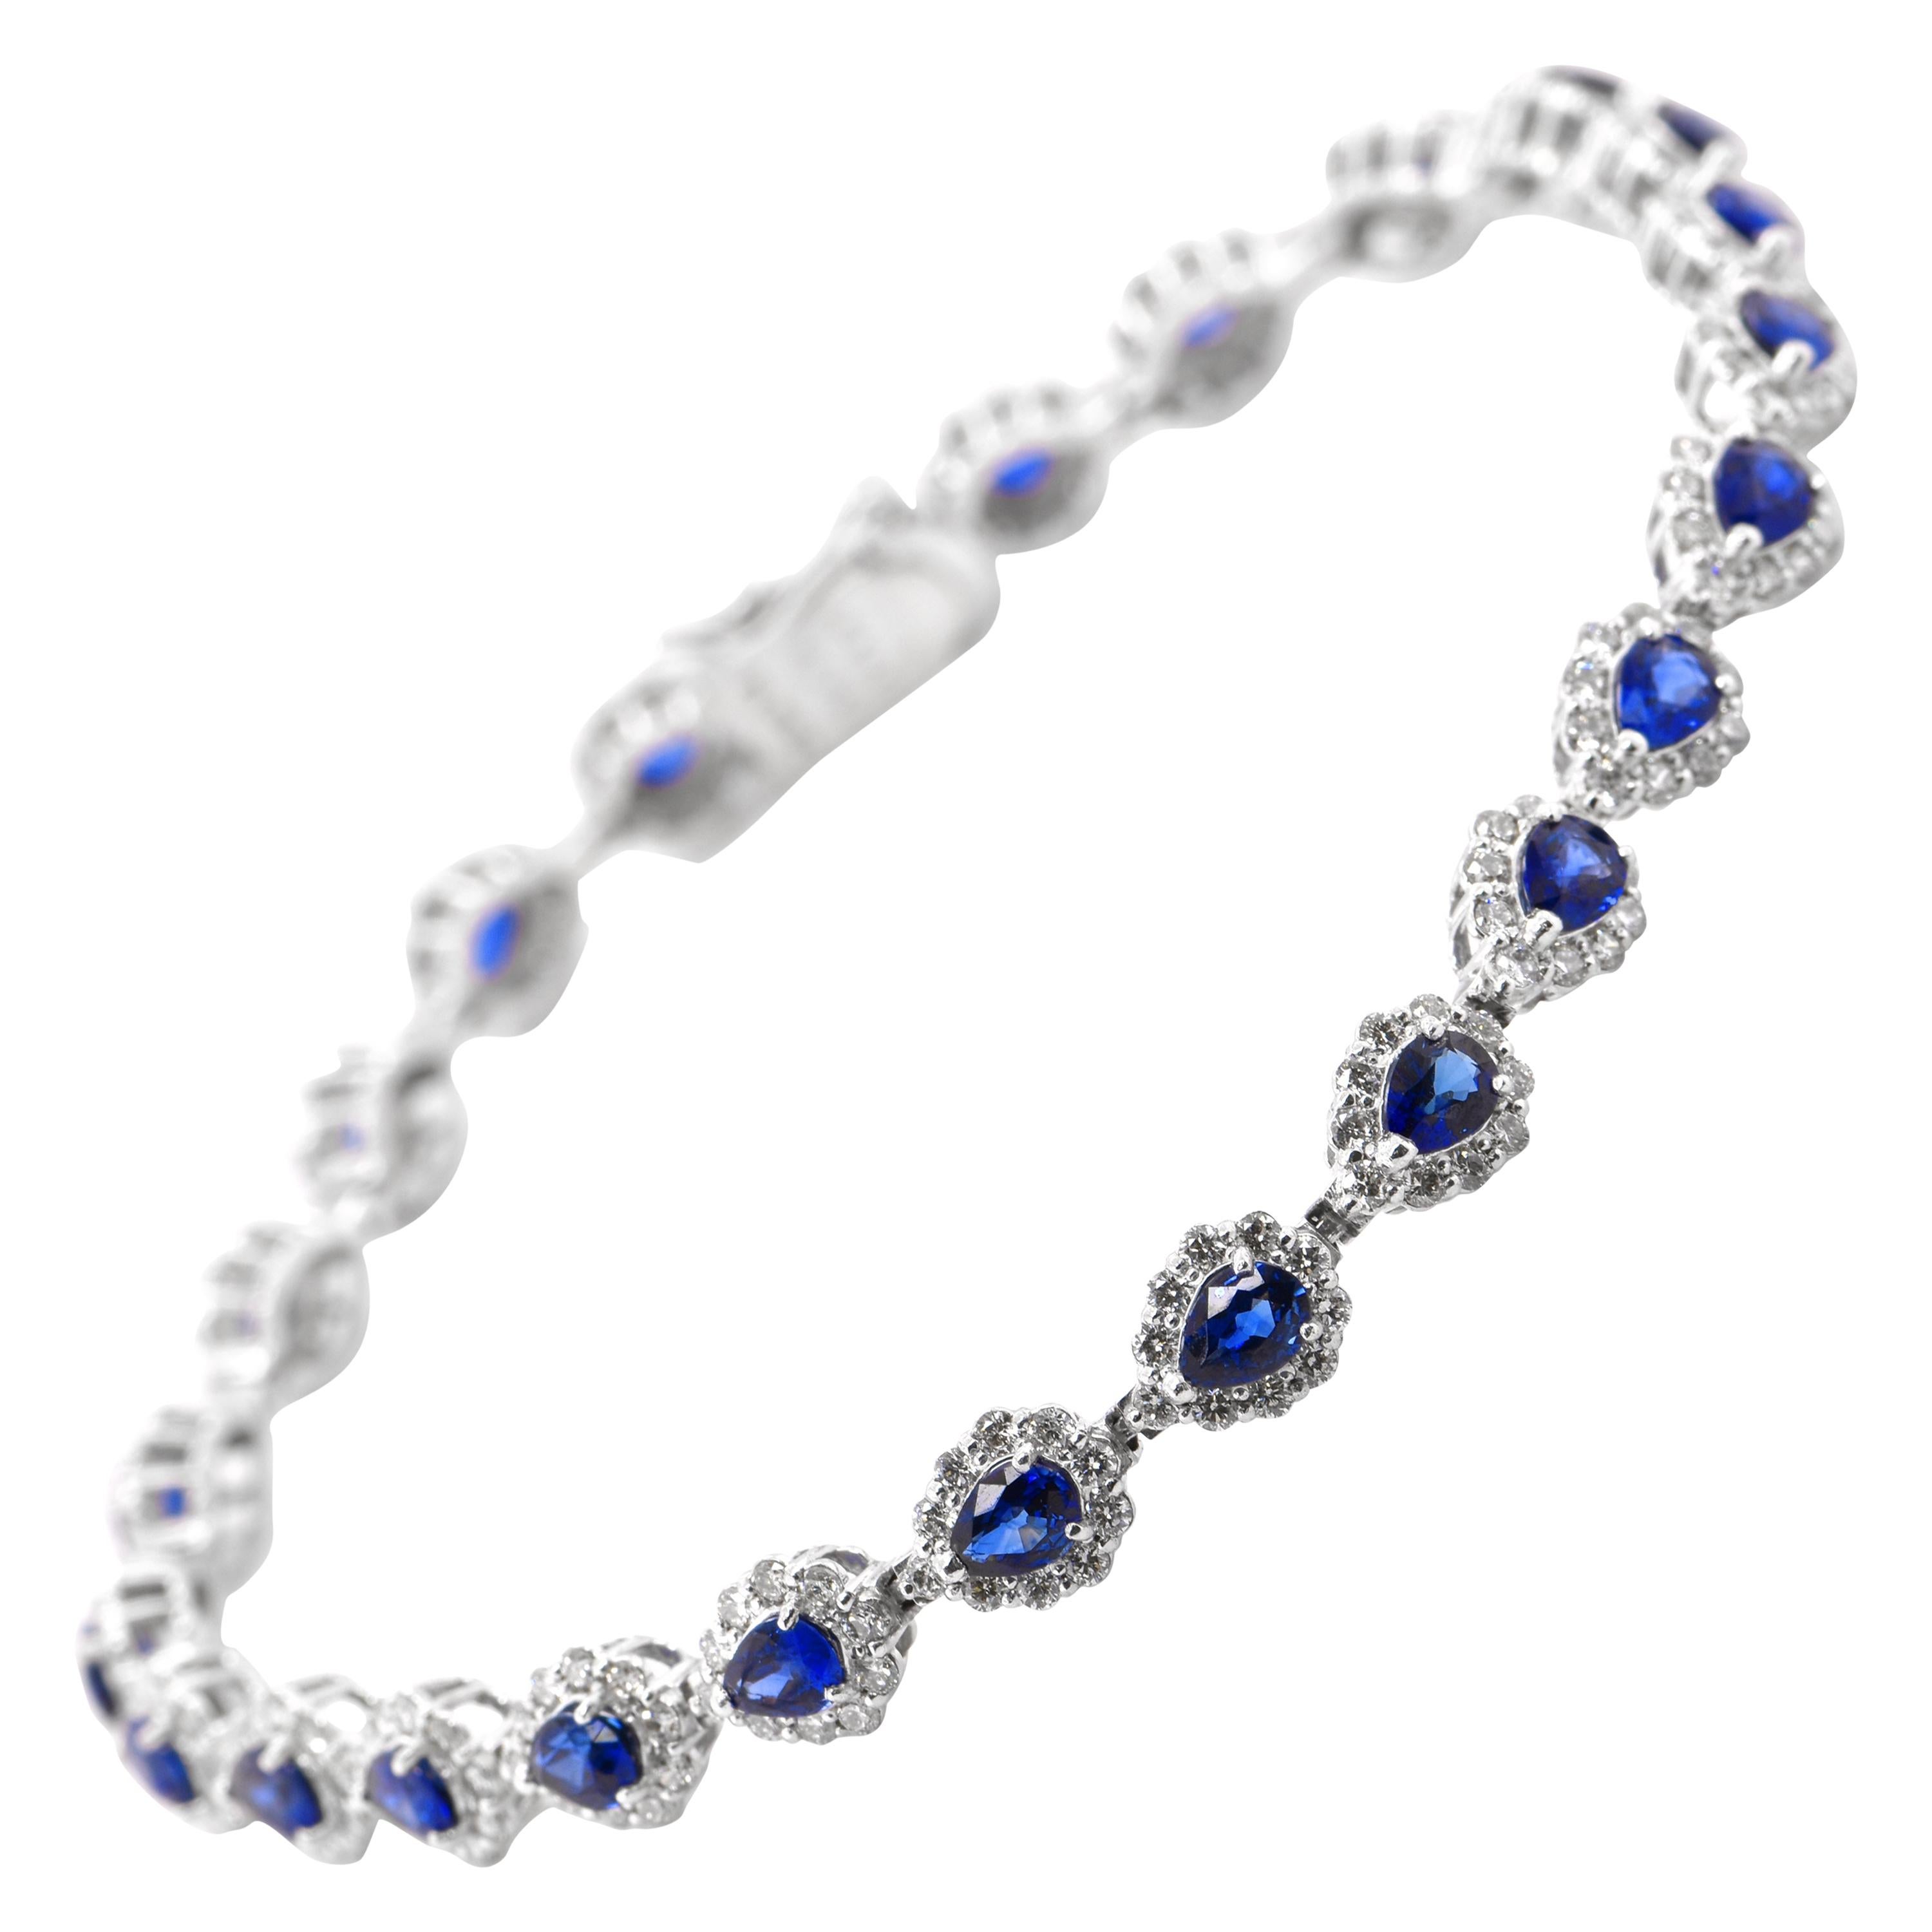 3.91 Carats, Natural Sapphire and Diamond Tennis Bracelet Set in Platinum